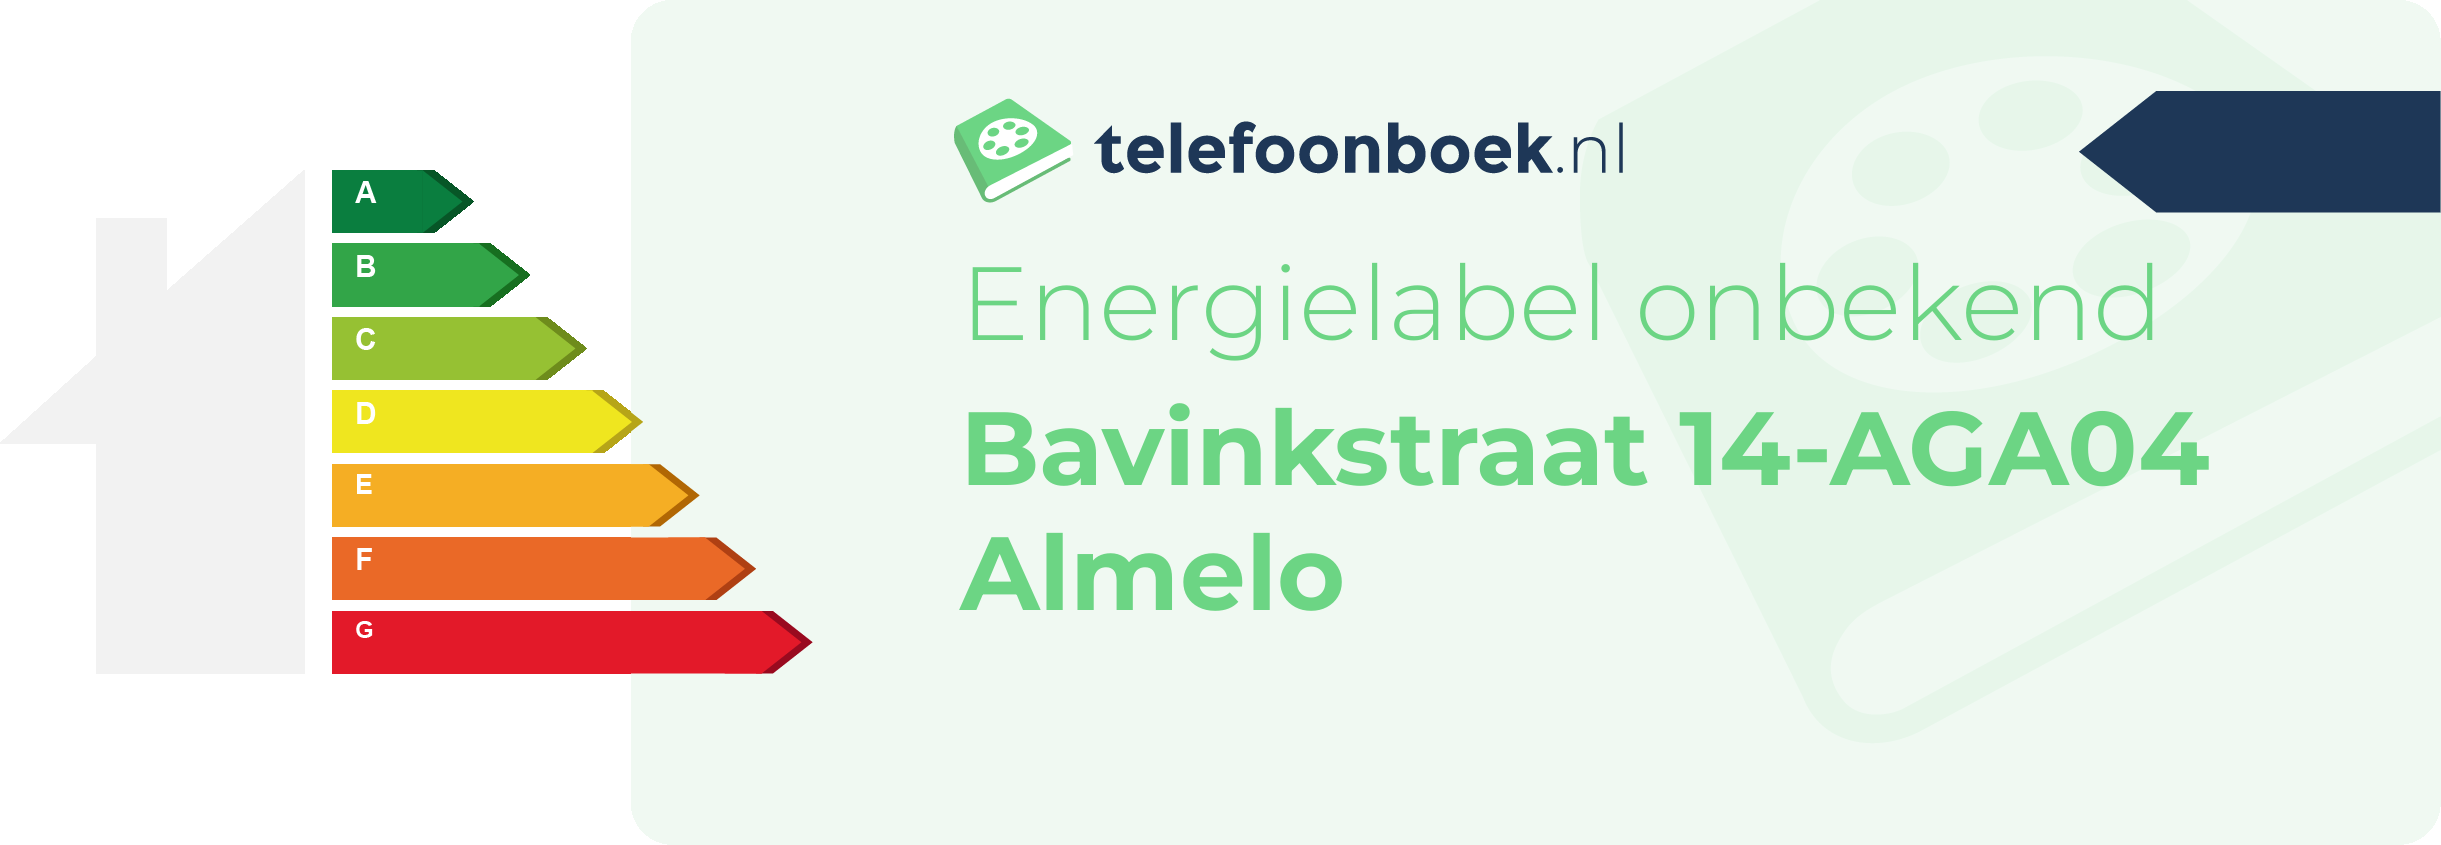 Energielabel Bavinkstraat 14-AGA04 Almelo